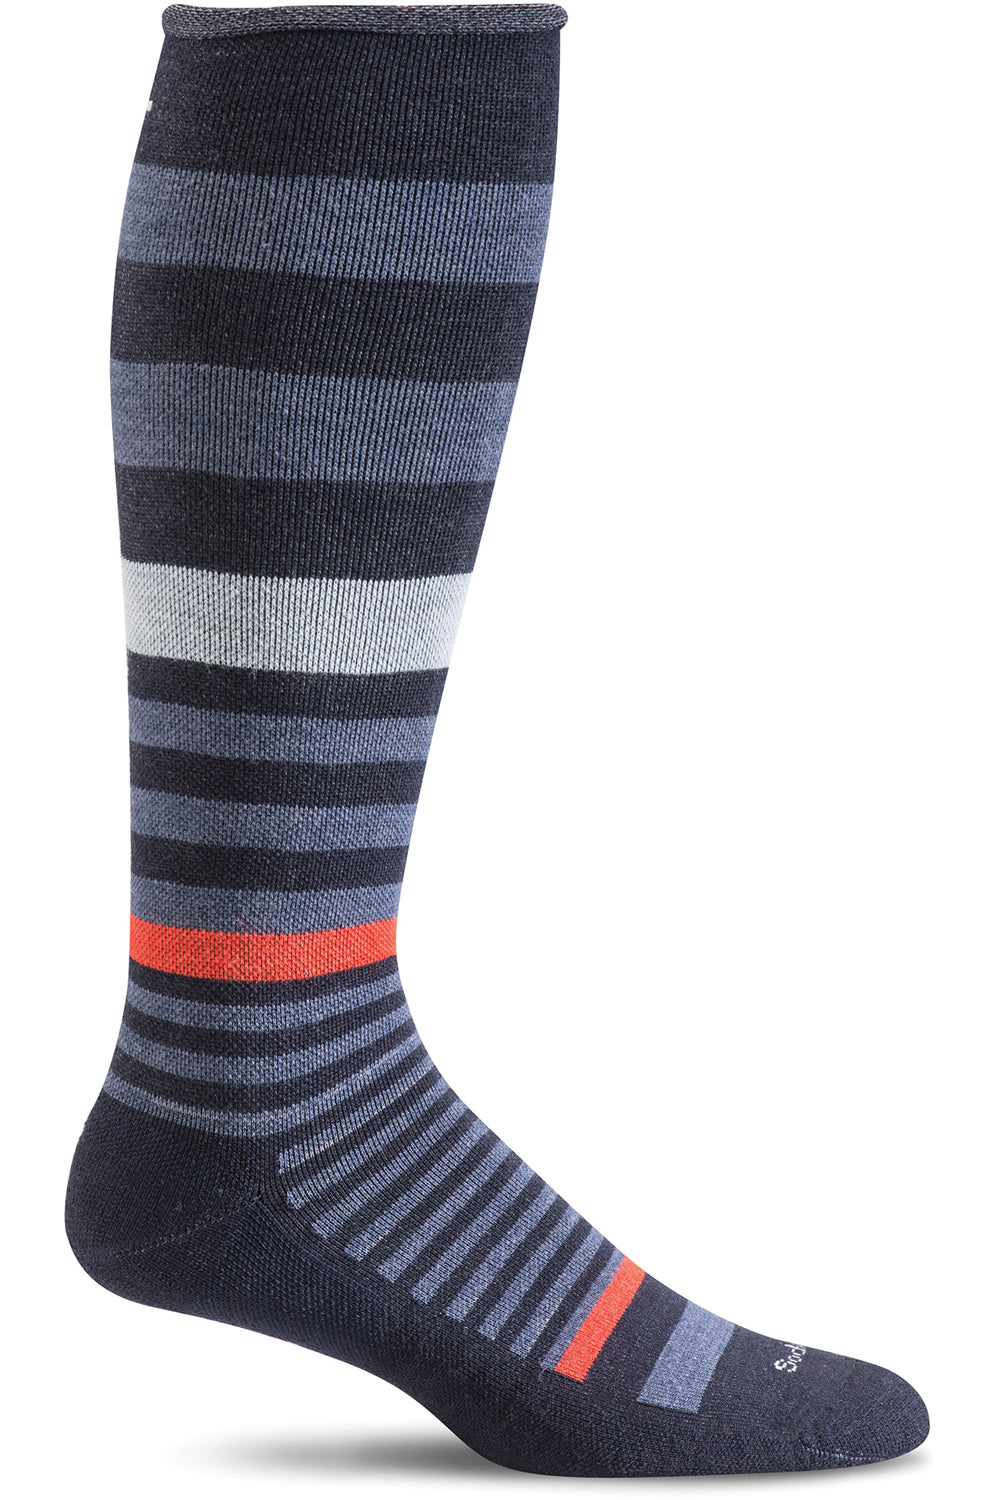 Sockwell Women's Orbital Stripe Sock in Navy color from the side